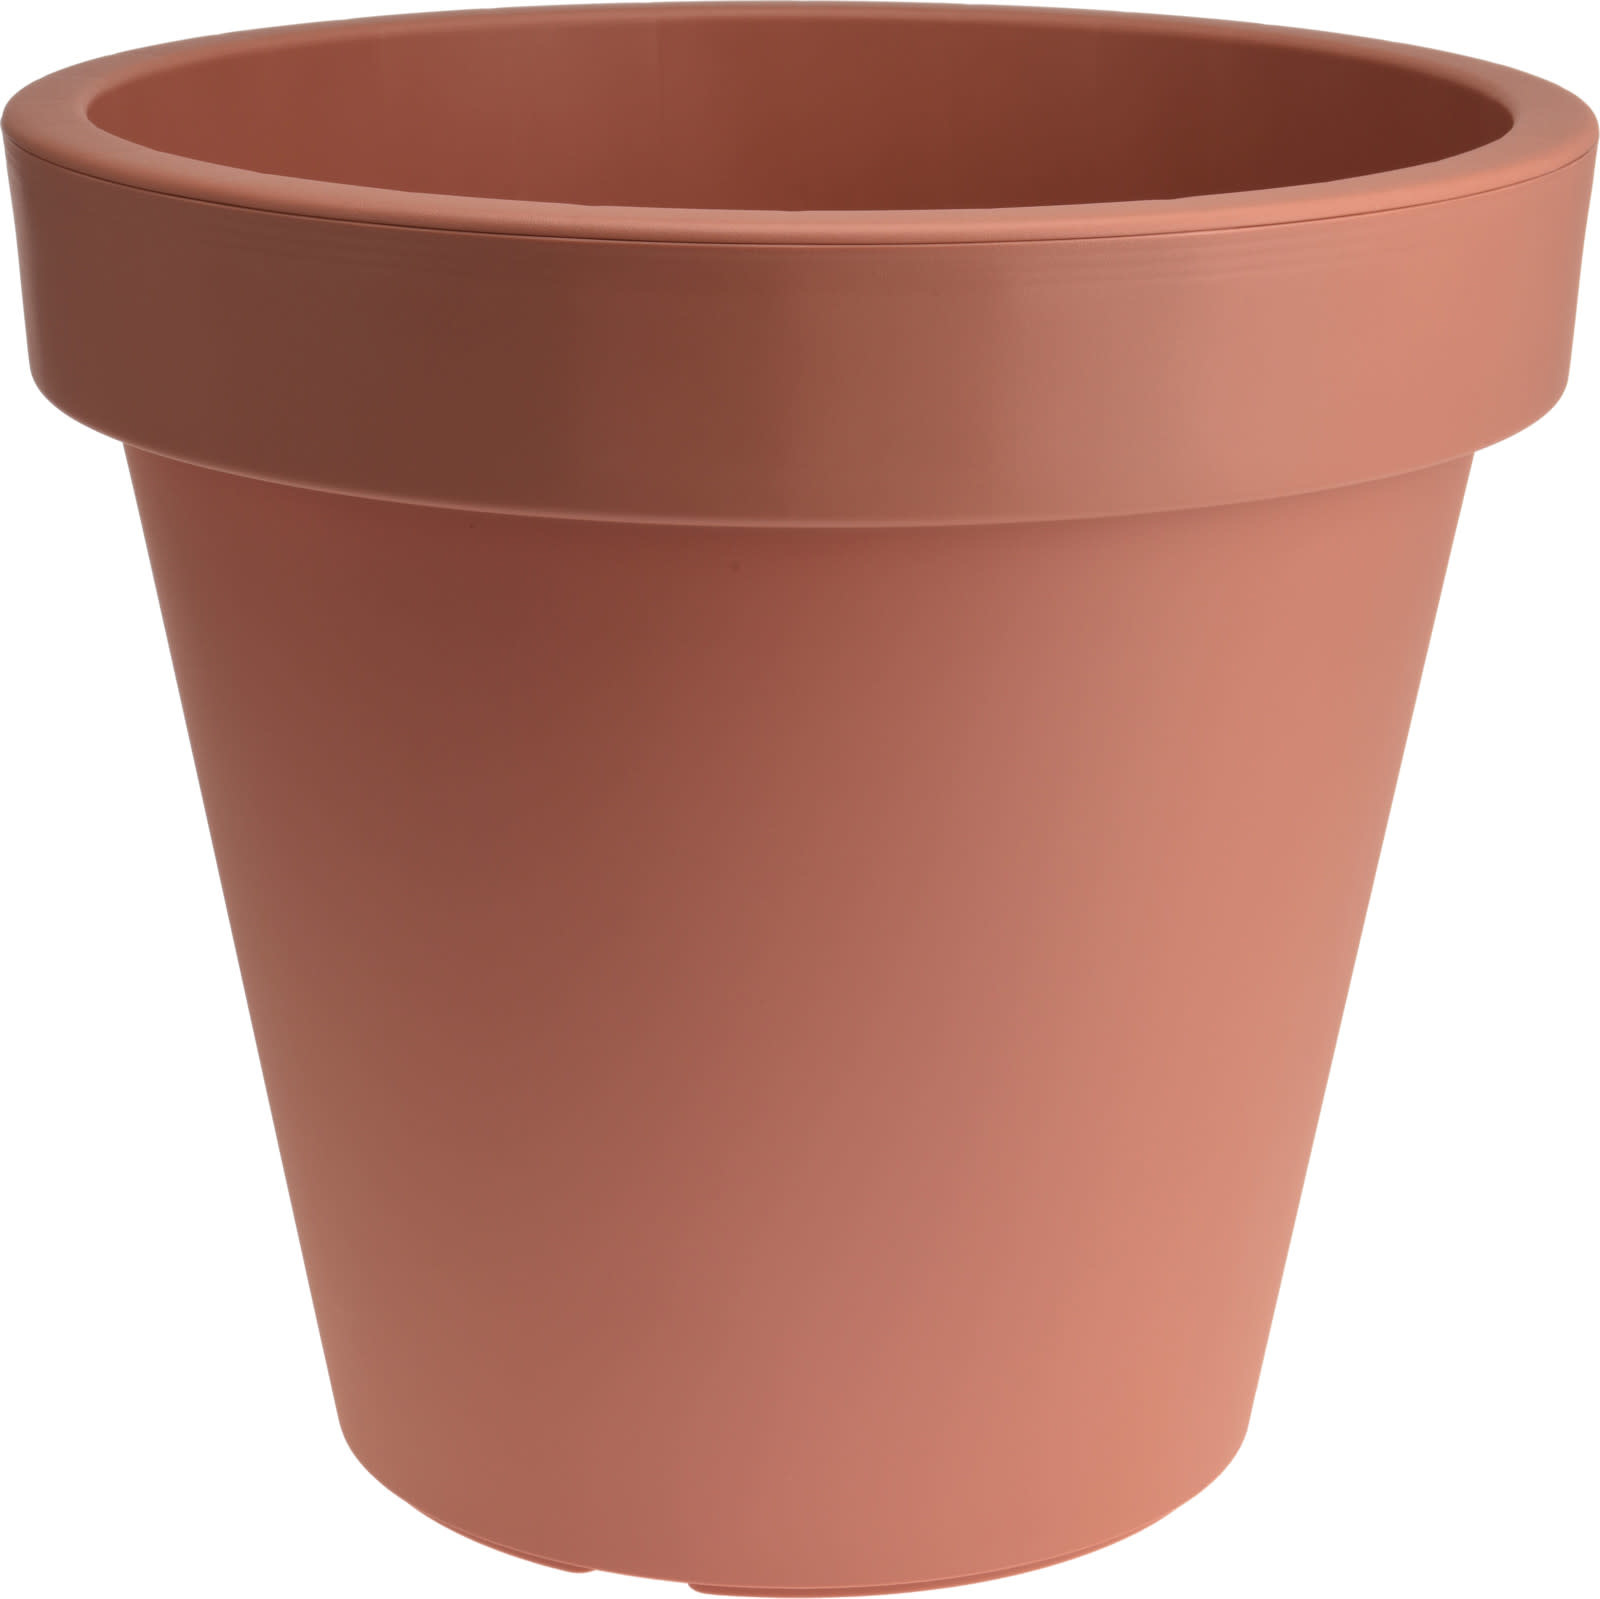 Flower Plastic Pot Round Terracotta